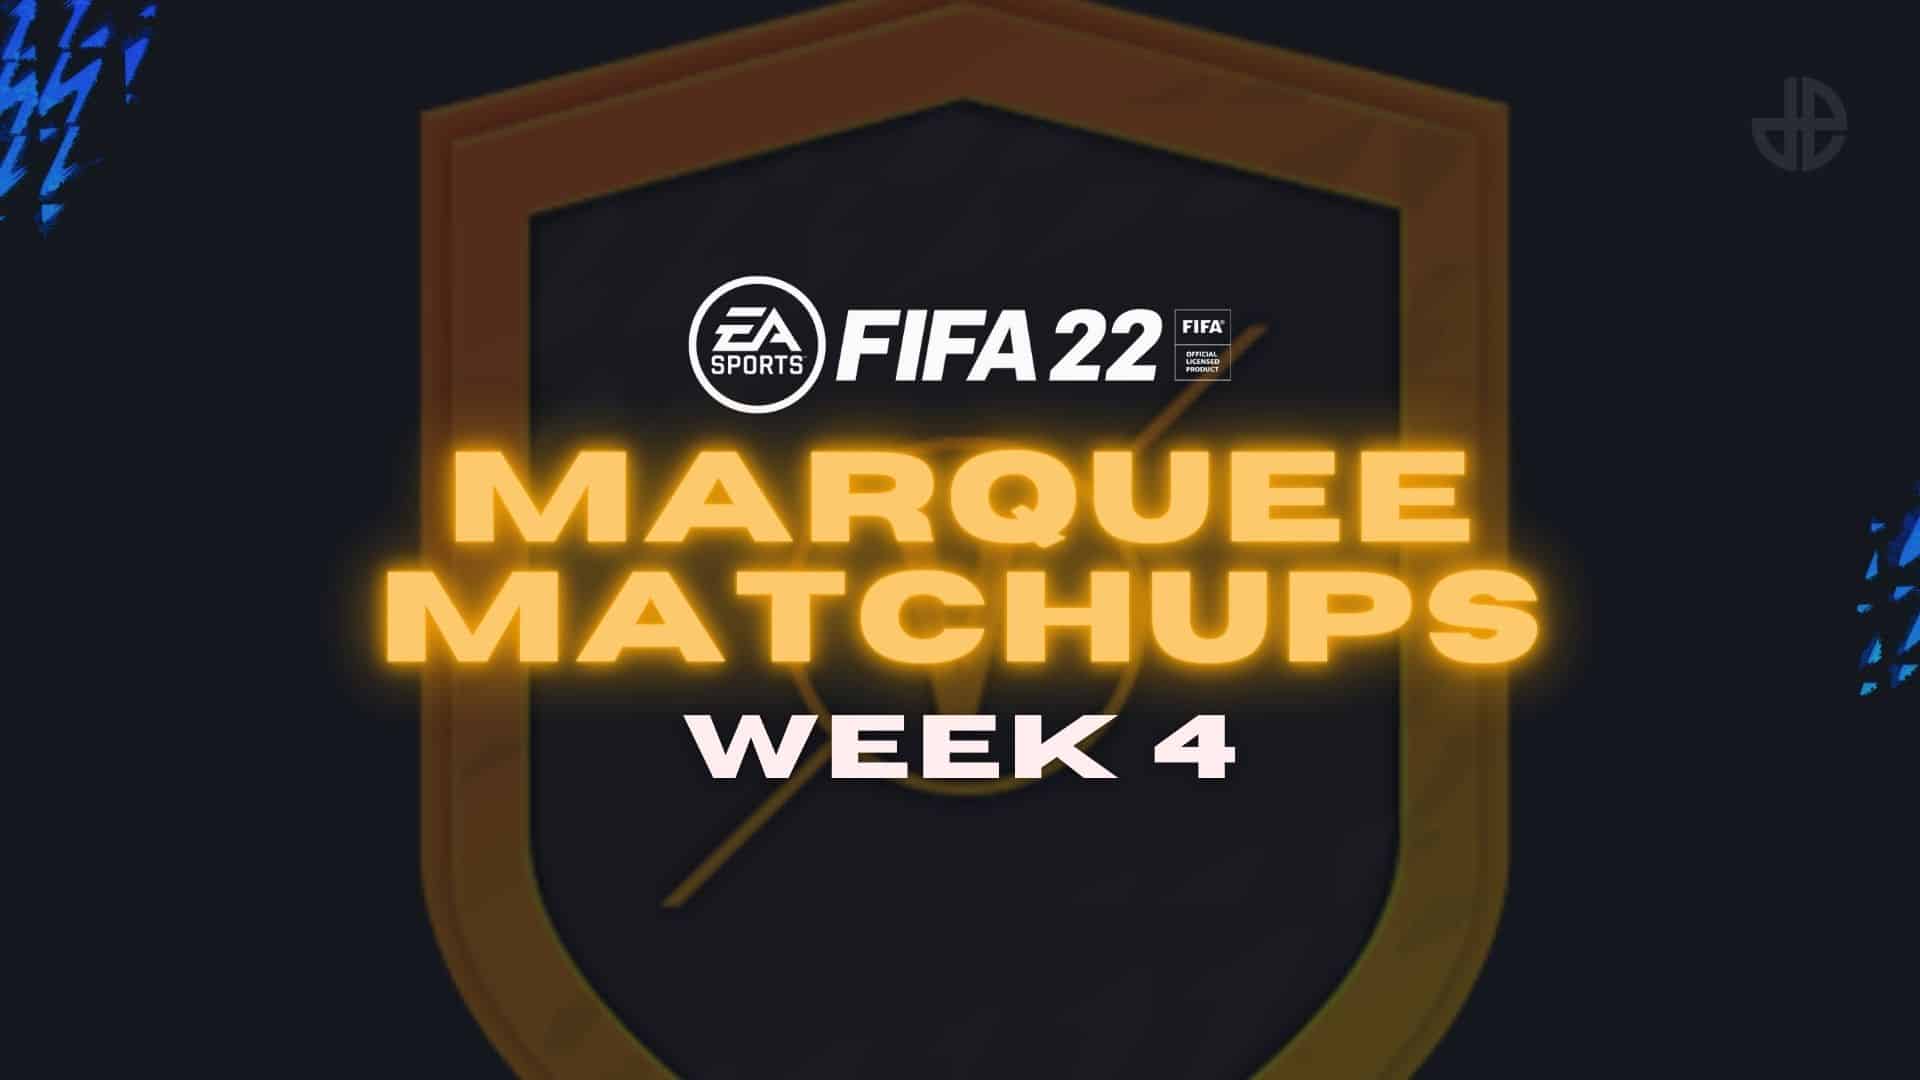 FIFA 22 Marquee Matchups